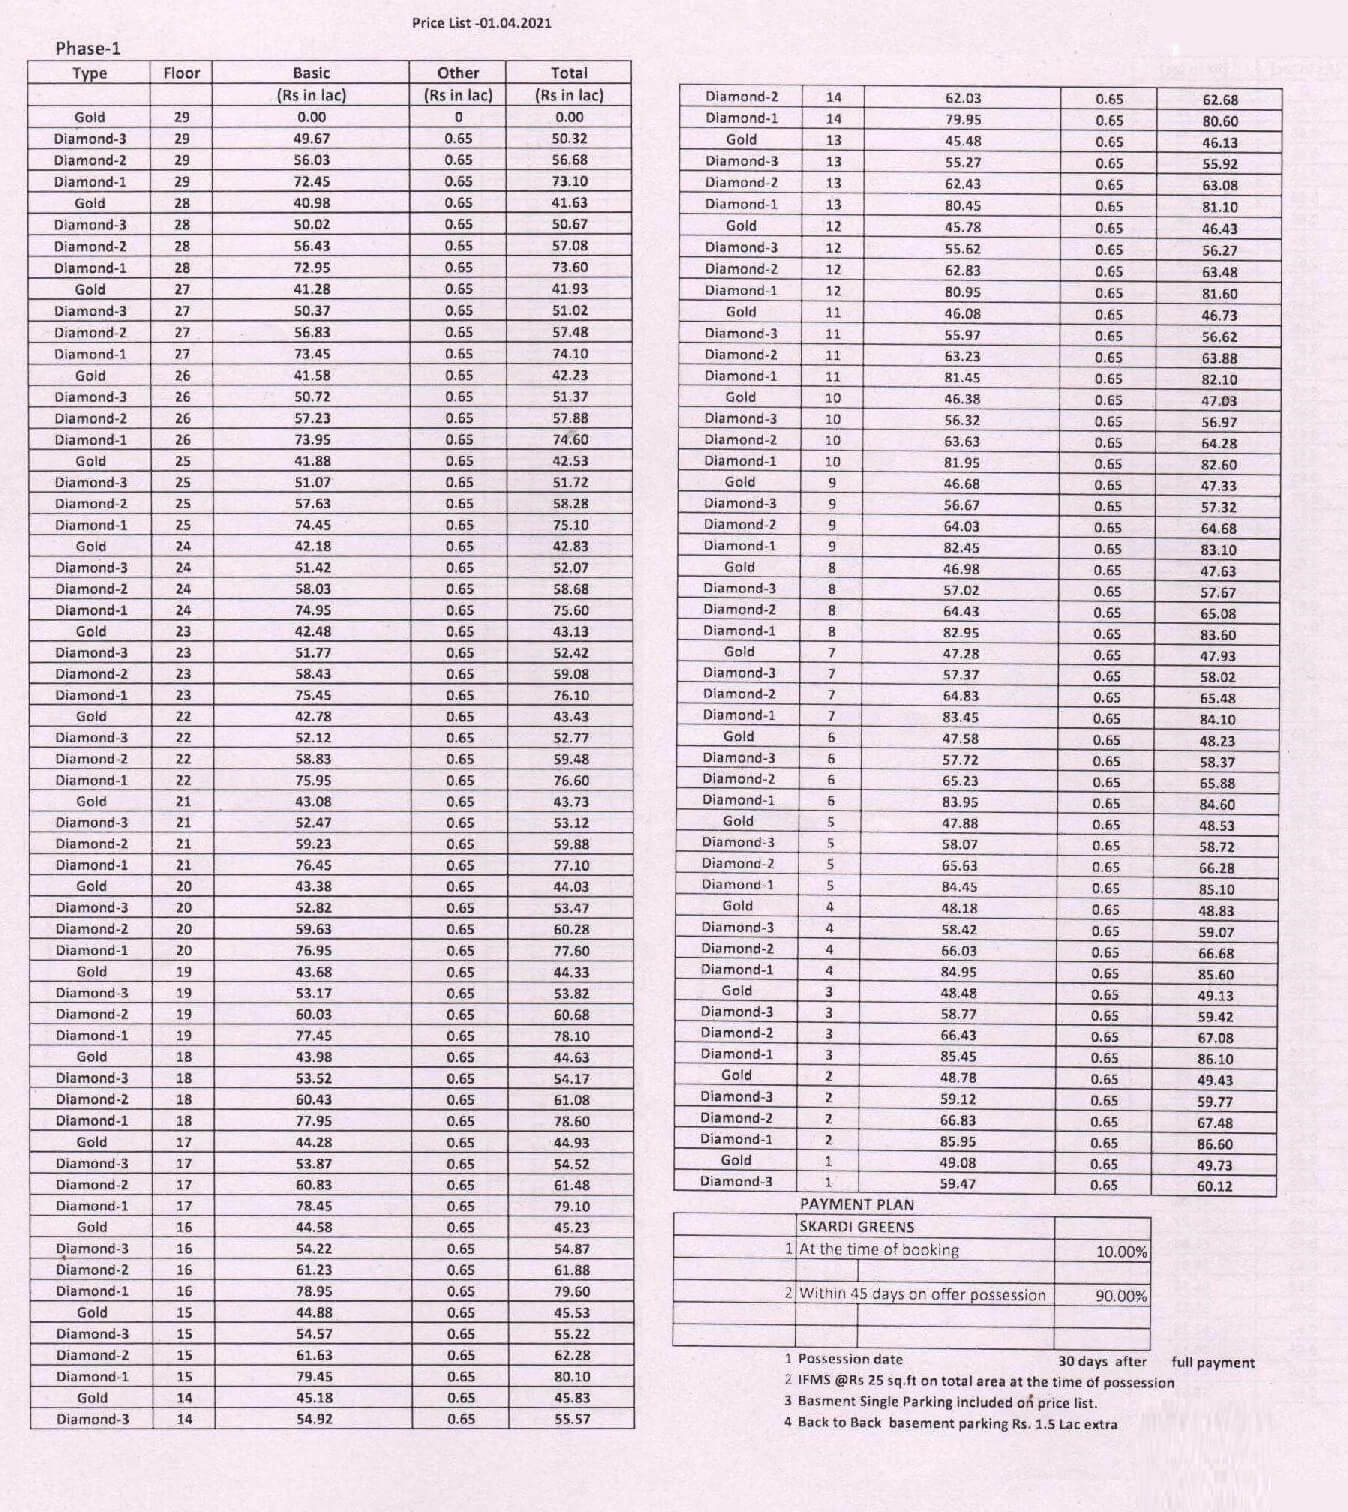 Skardi Greens Phase 2 Price List